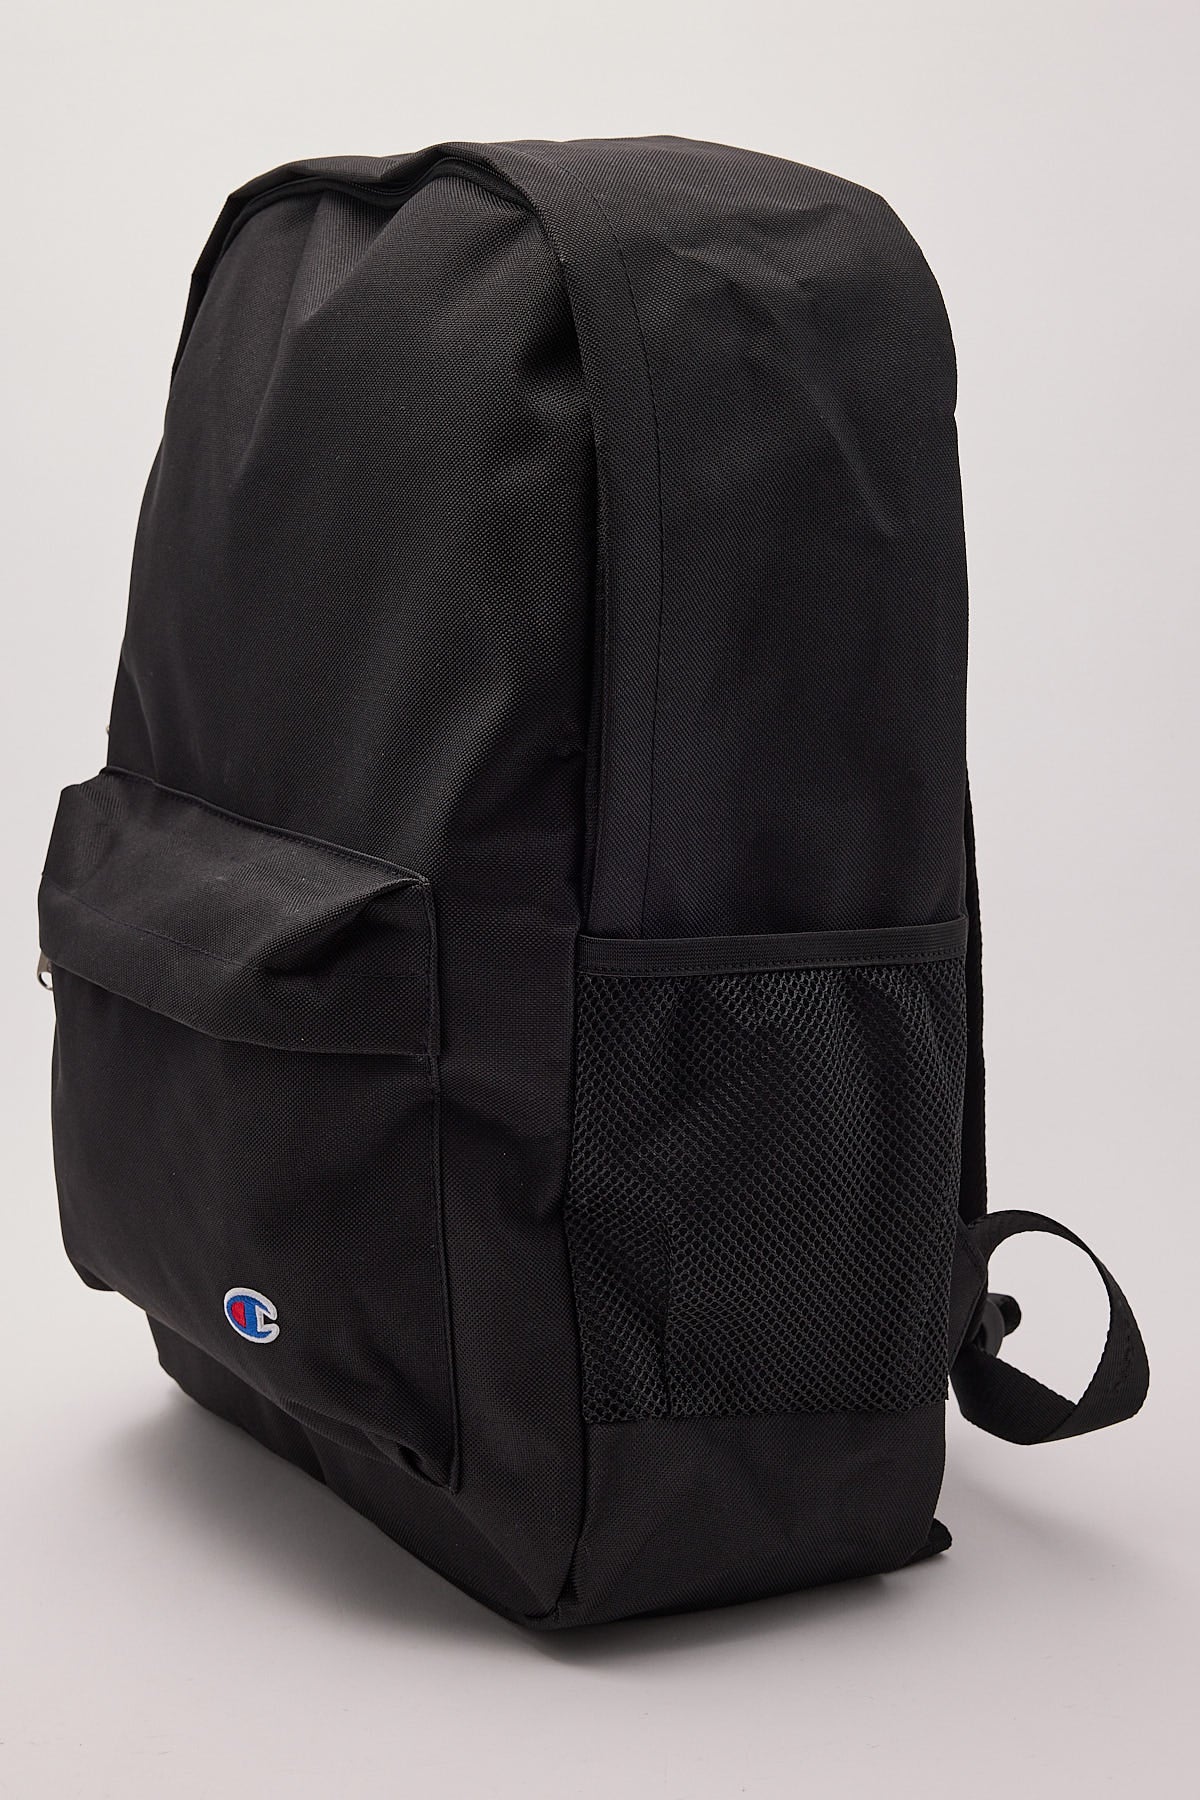 Champion Large Backpack Black